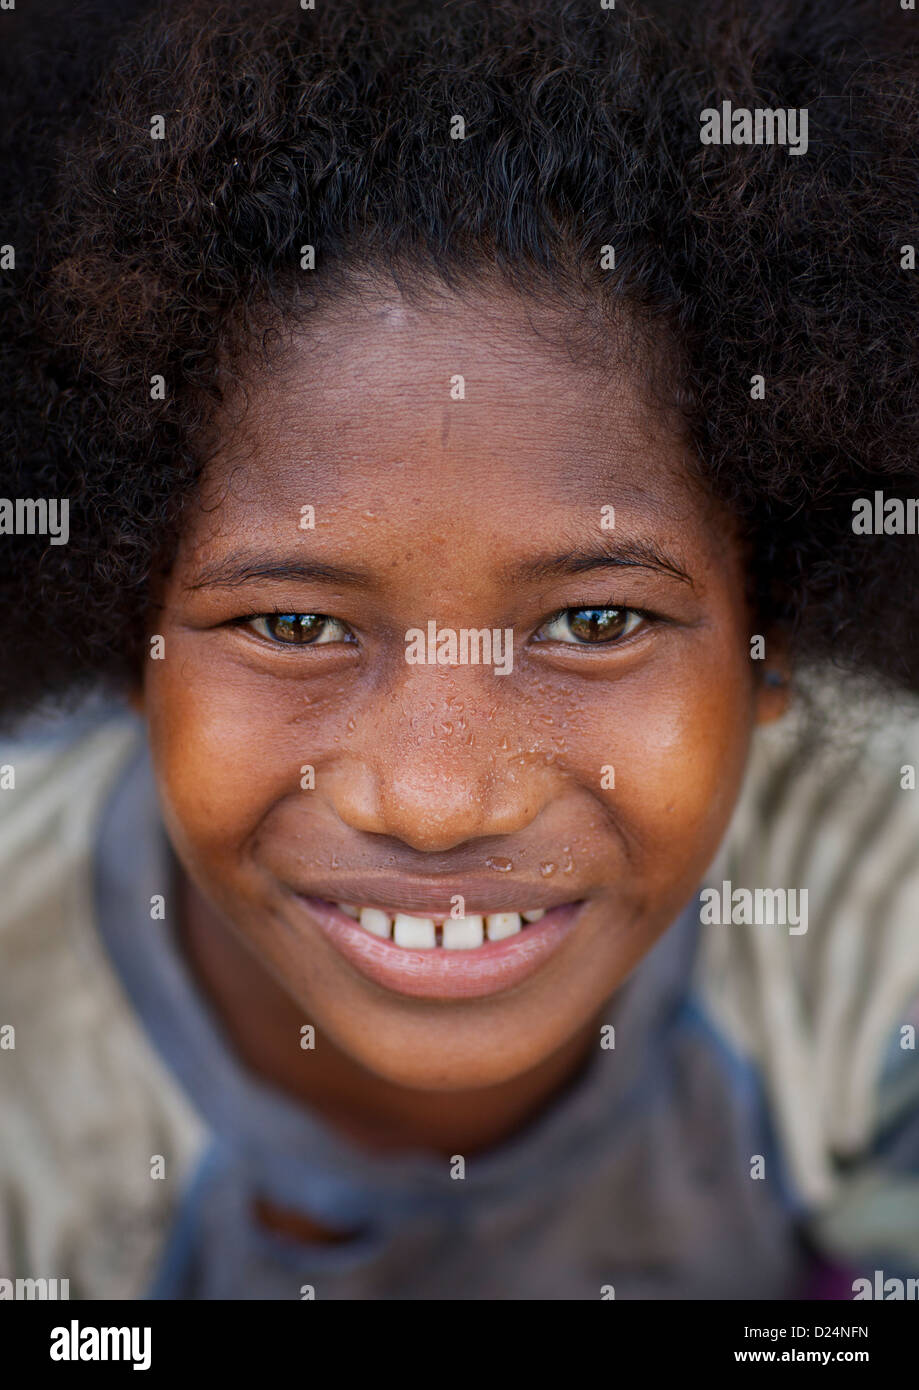 Joven sonriente, isla de Trobriand, Papua Nueva Guinea Foto de stock